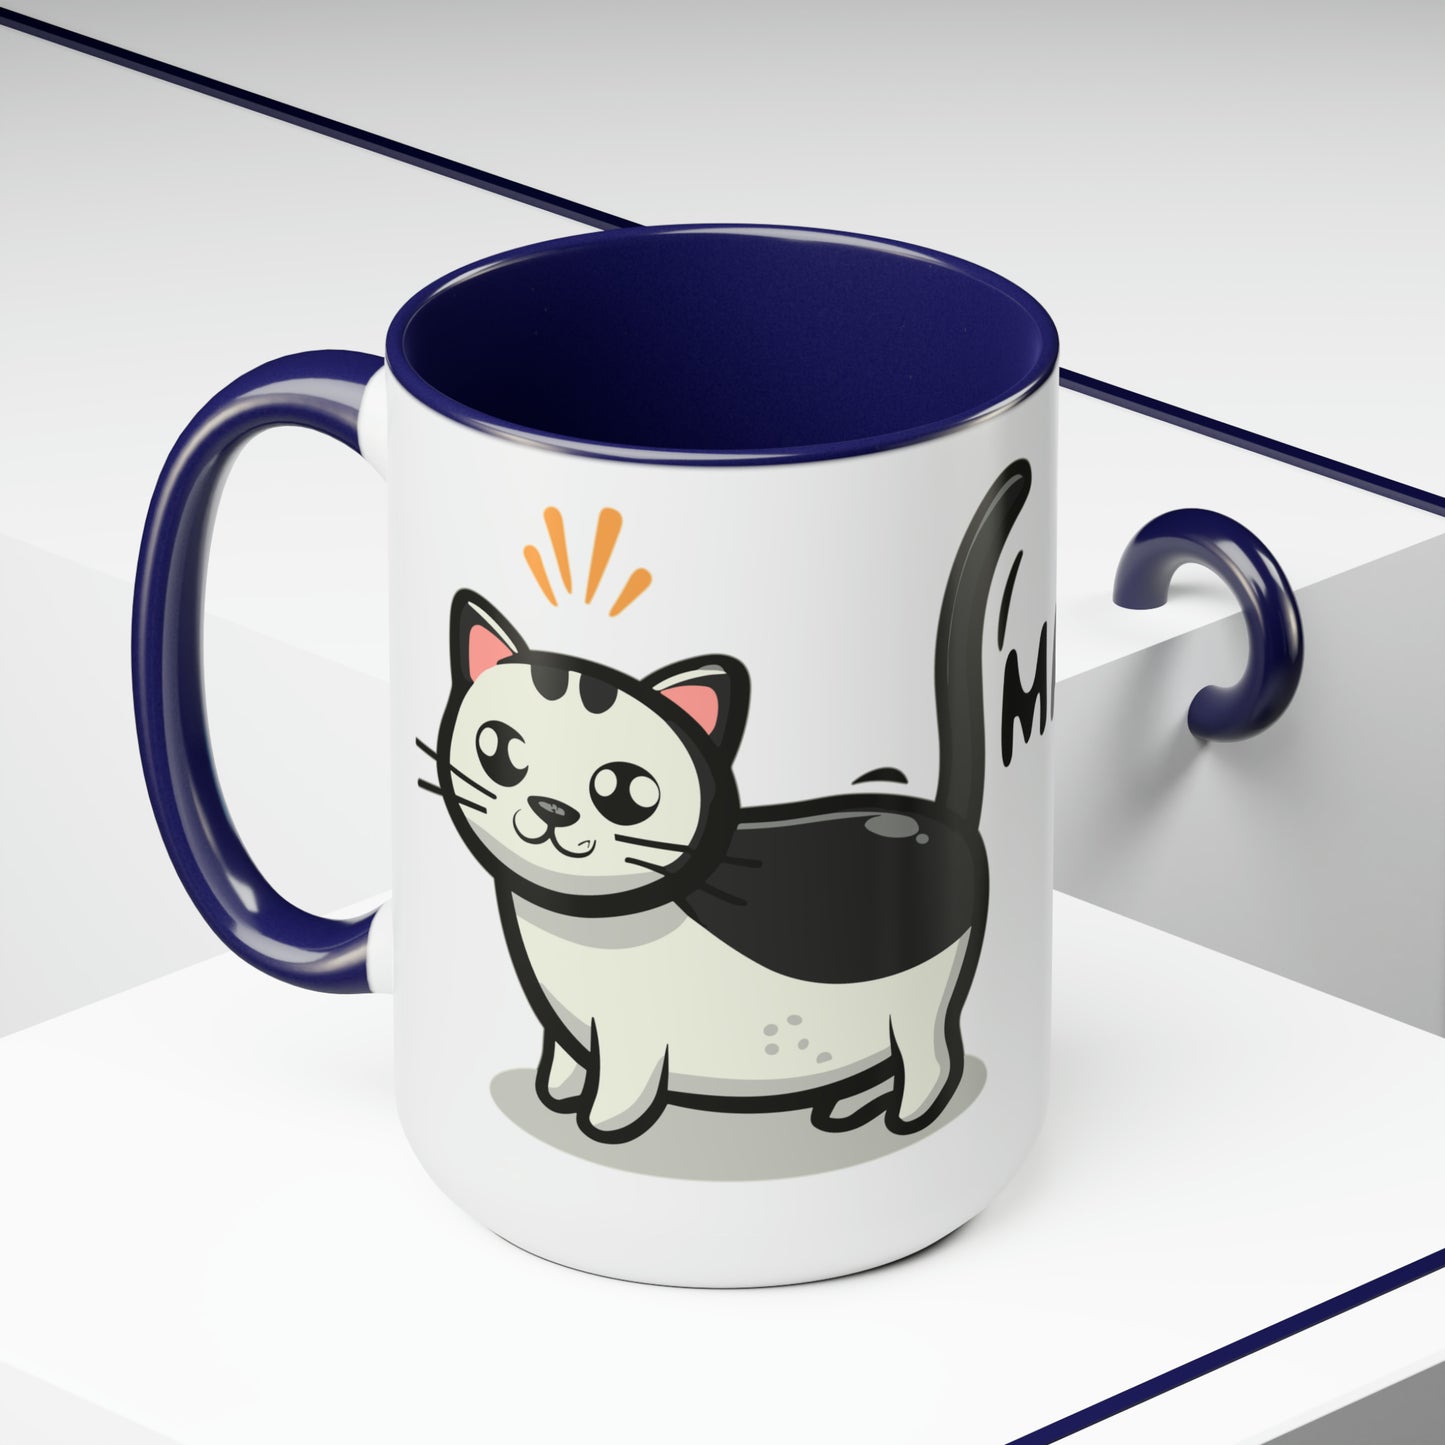 Cordial Kitty, May I Poop Here 15oz Coffee Mug